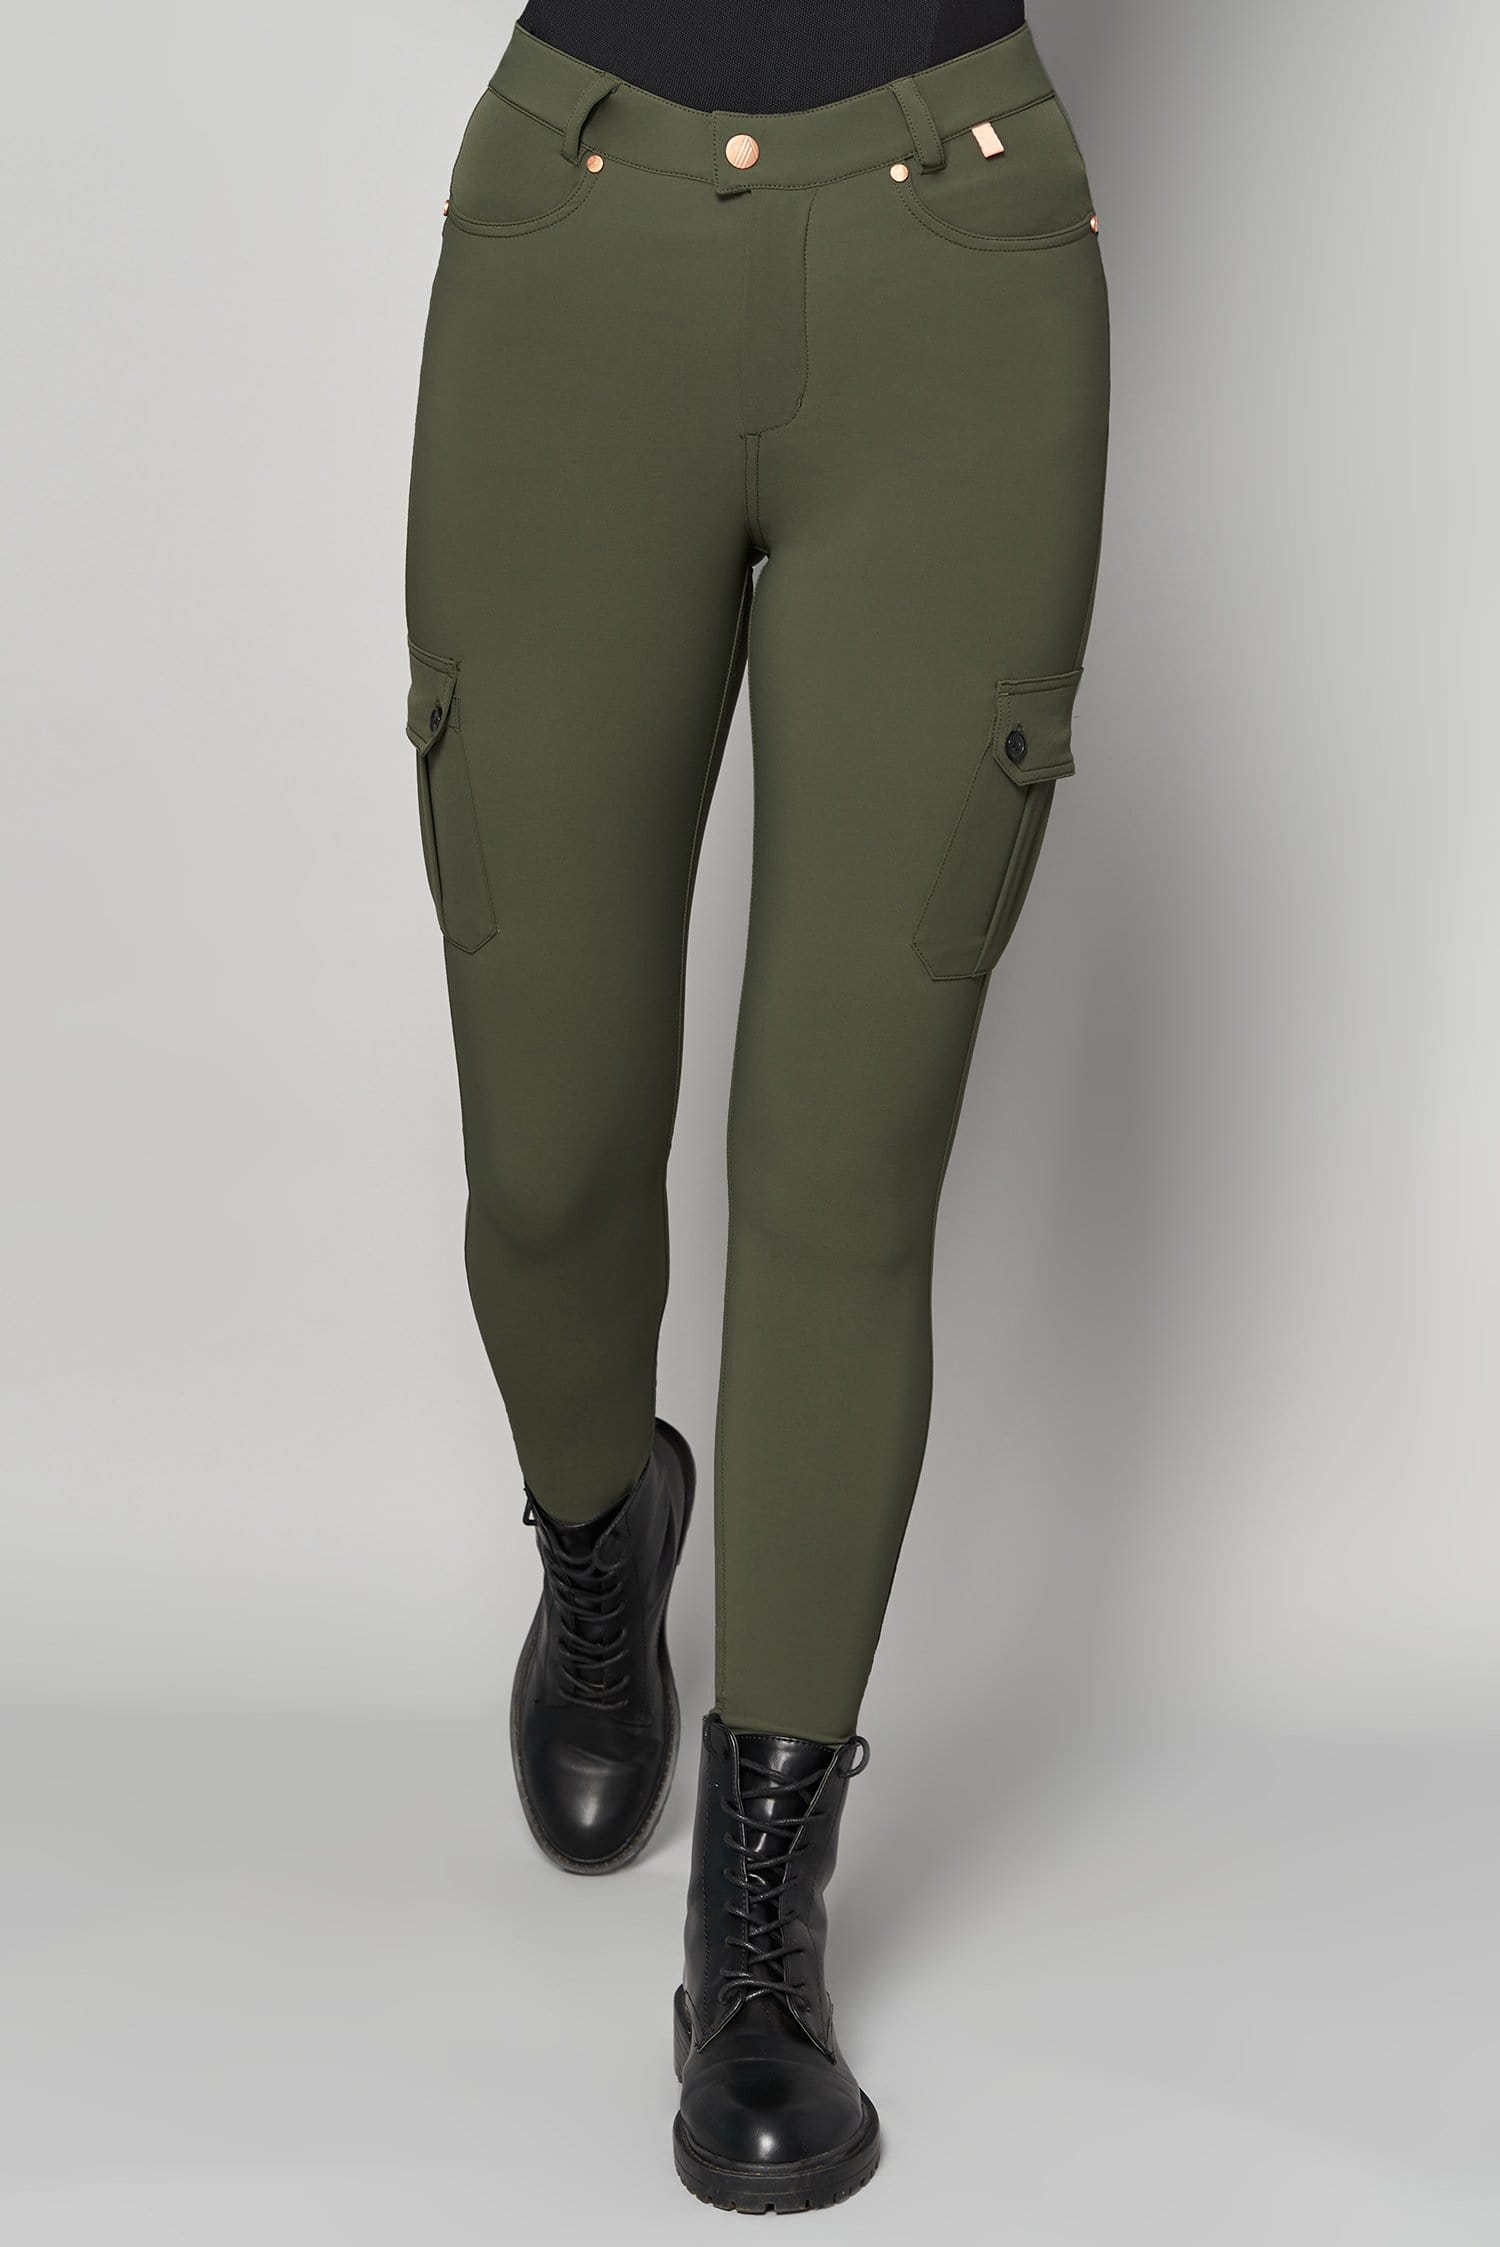 Cargo Max Stretch Outdoor Trousers - Khaki - 26p / Uk8 - Womens - Acai Outdoorwear